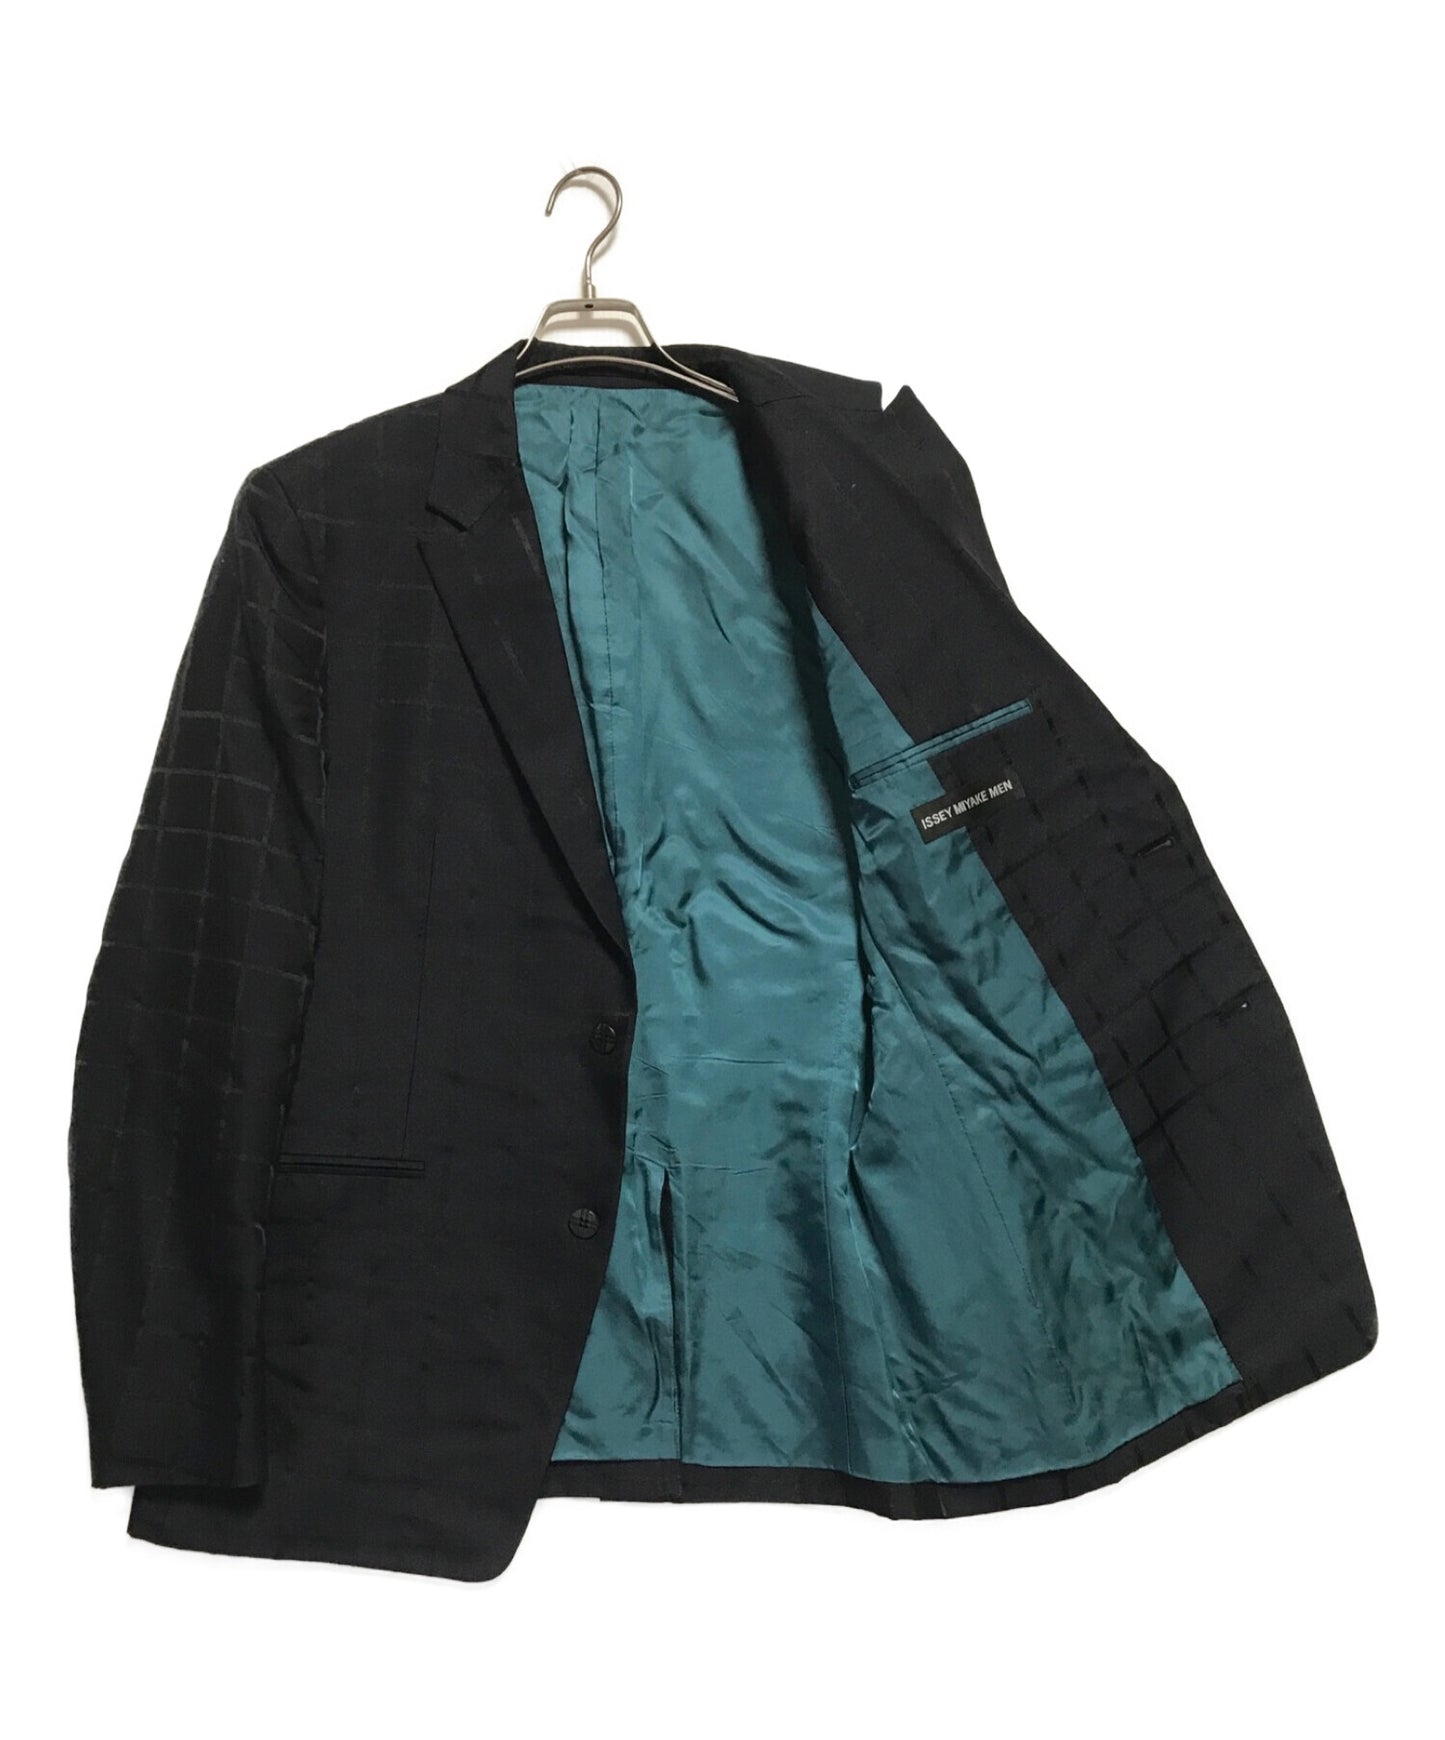 Issey Miyake Men Windpeahene Check Design Jacket Tailored Me53fd060